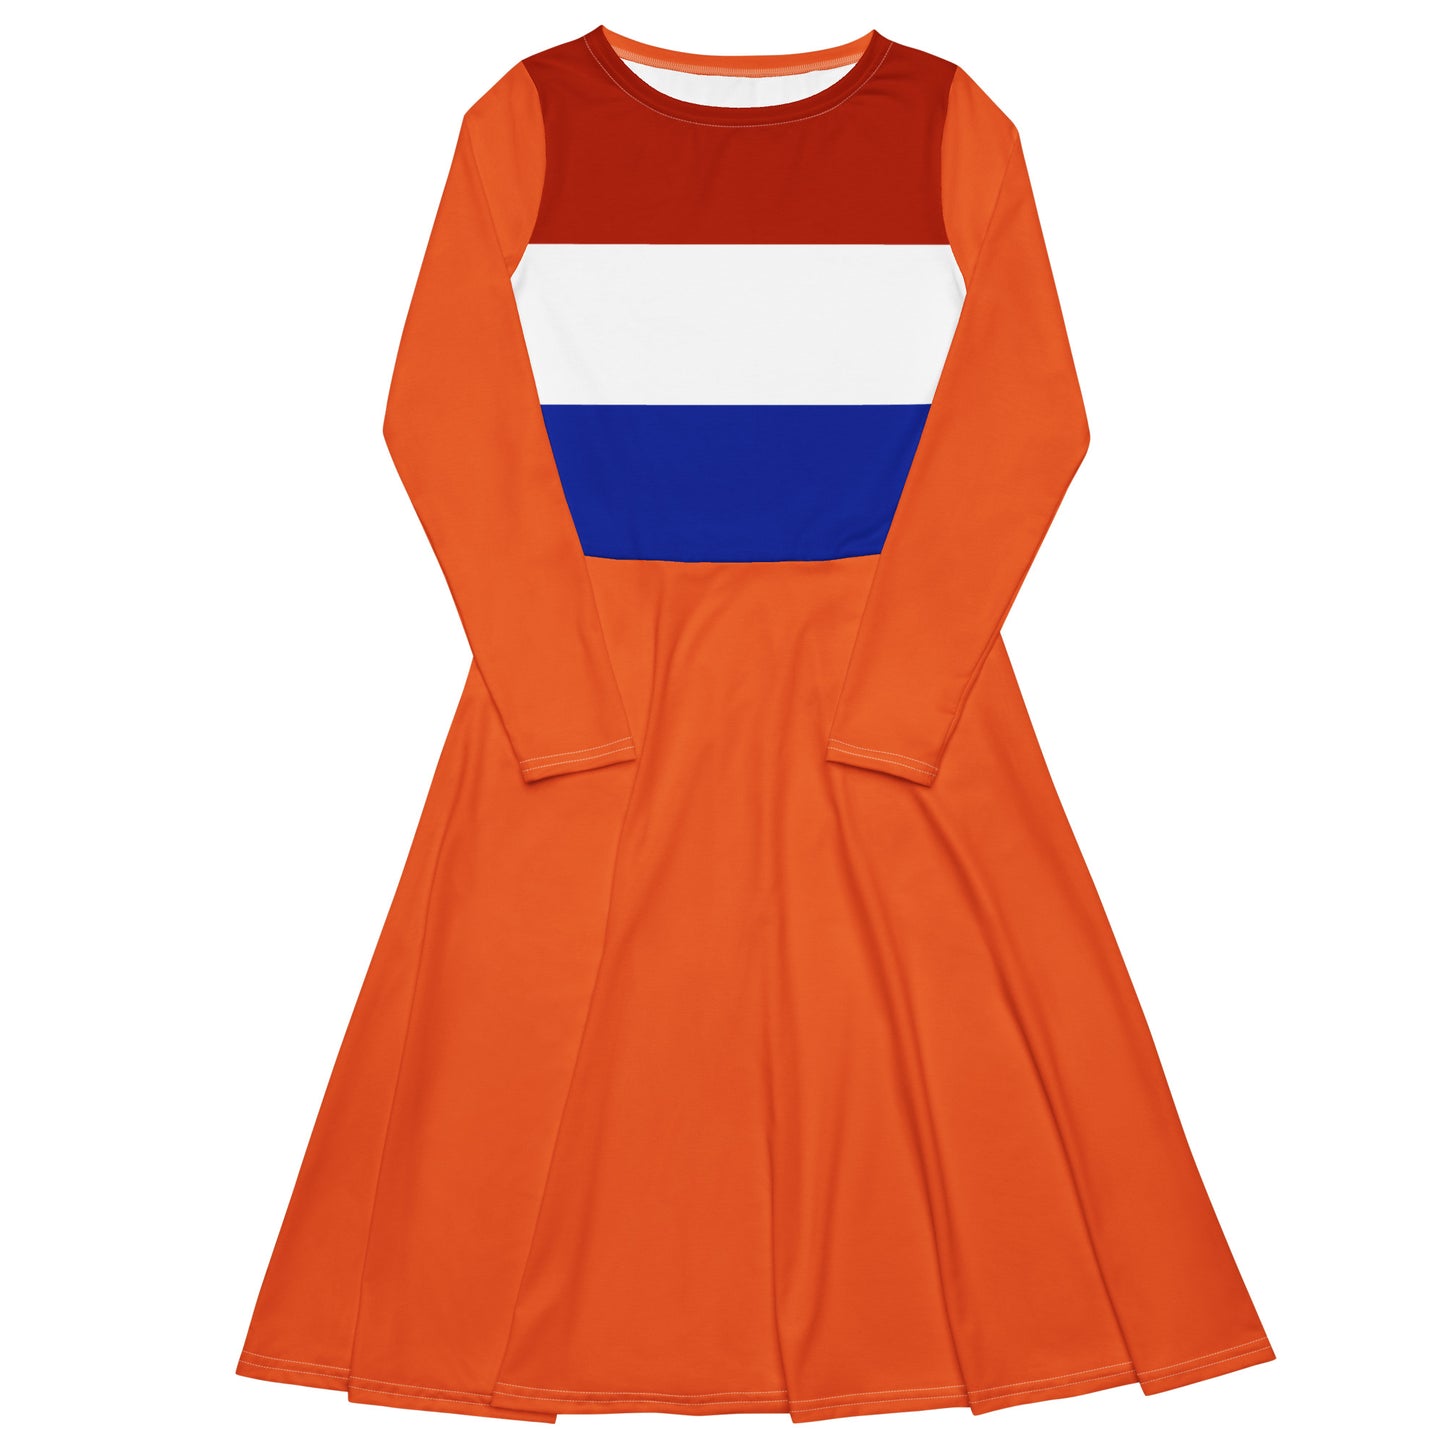 The Netherlands patriot dress